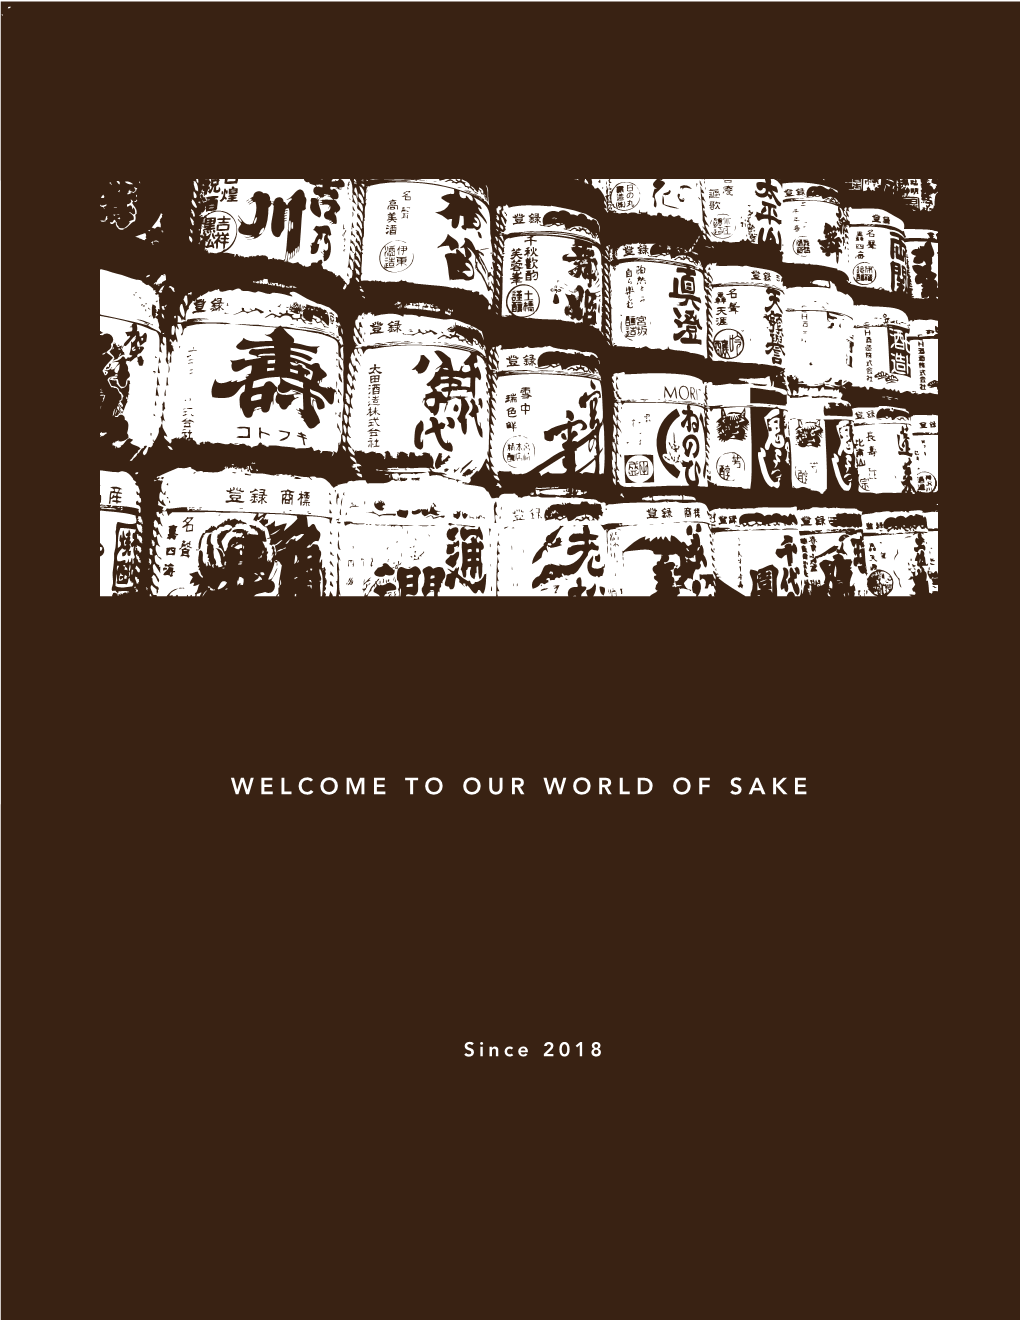 Our World of Sake